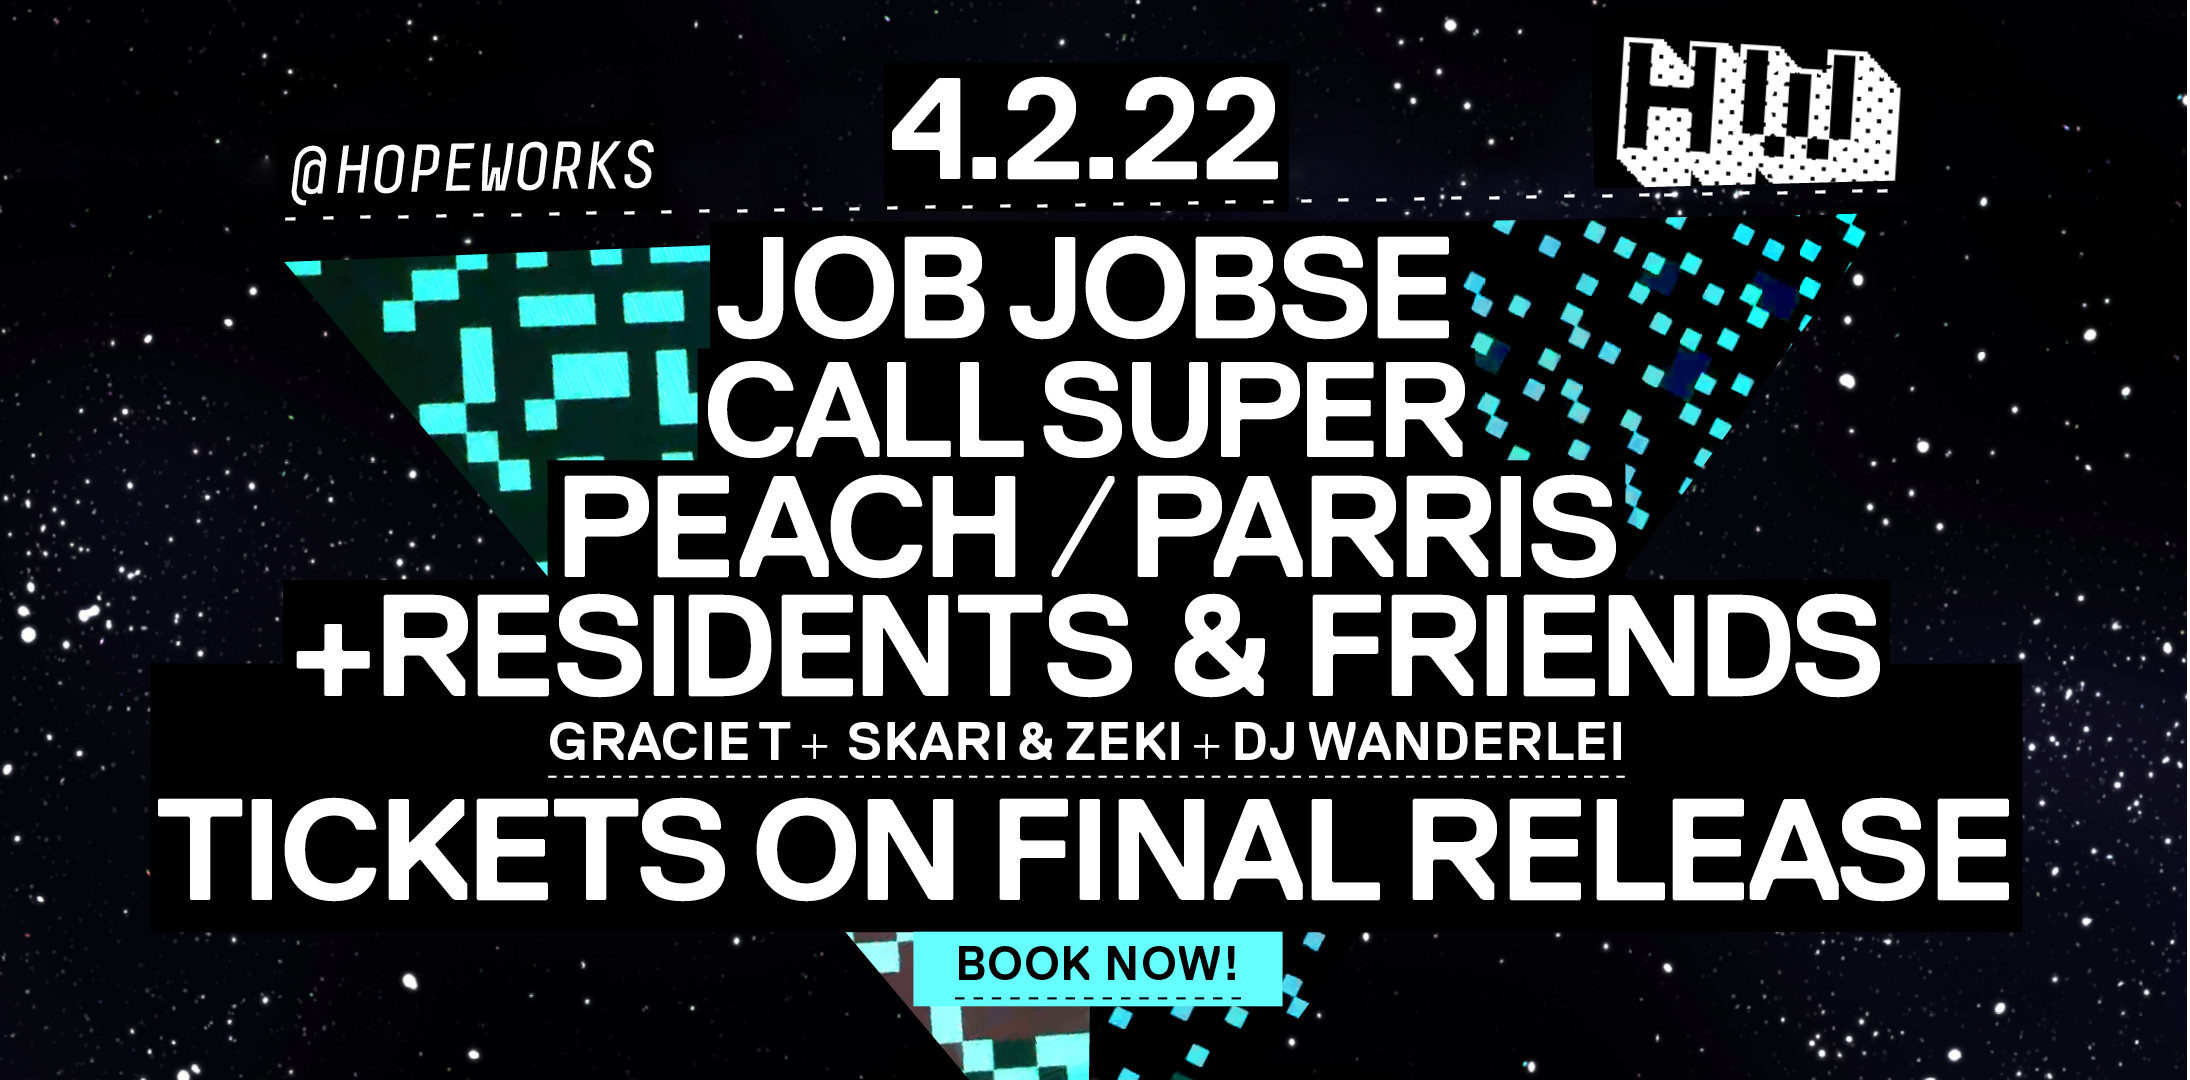 Hope Works presents: Job Jobse, Call Super, Peach, Parris - Flyer front